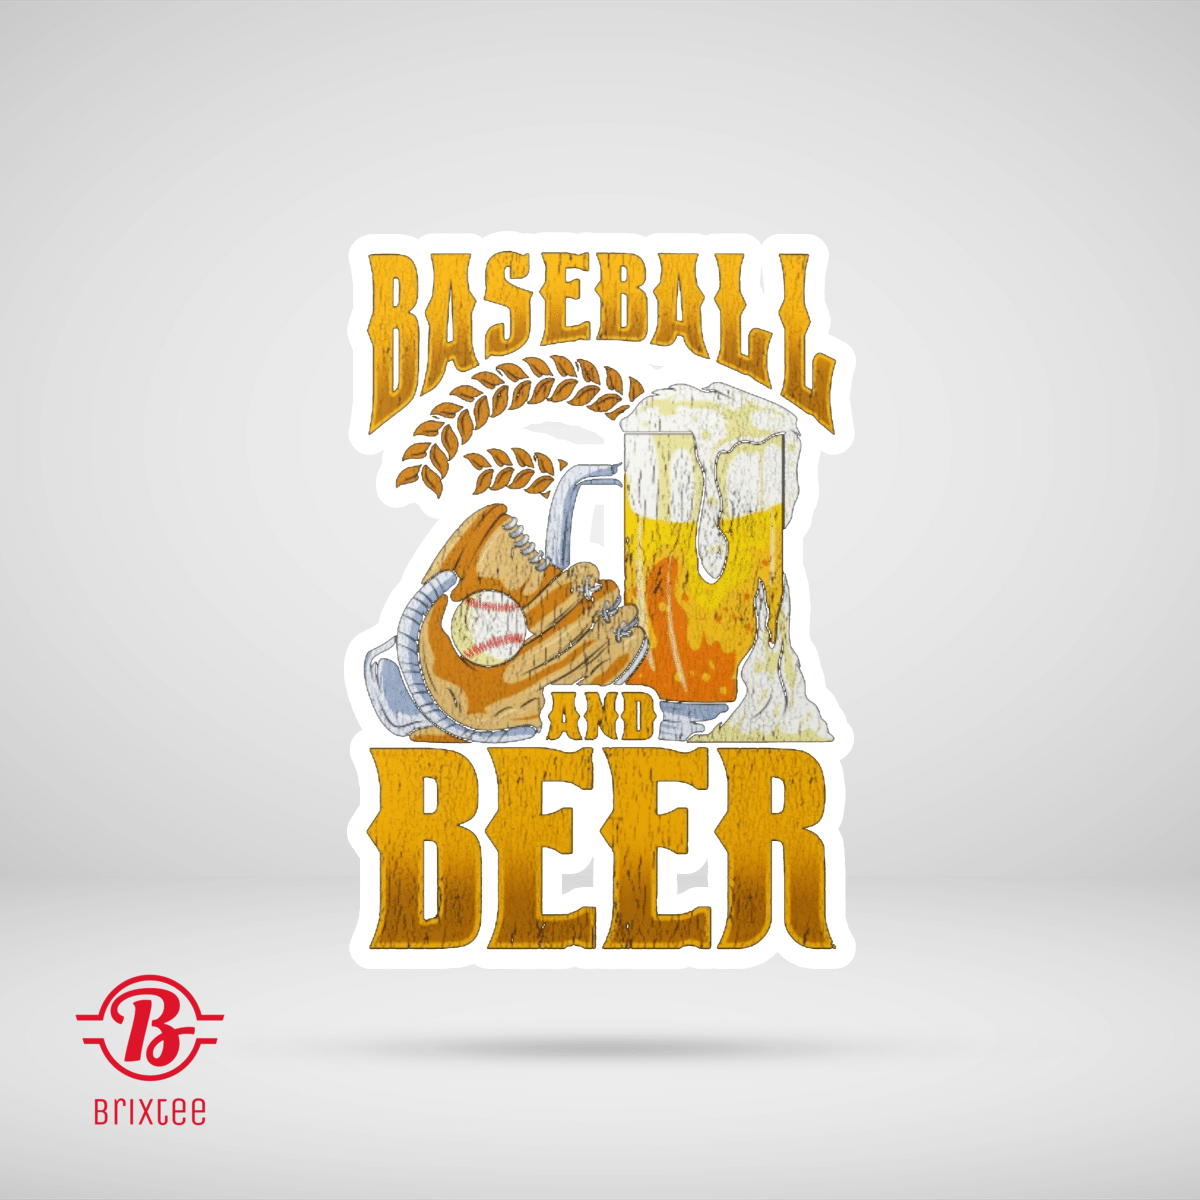 Baseball And Beer Make The Perfect Day